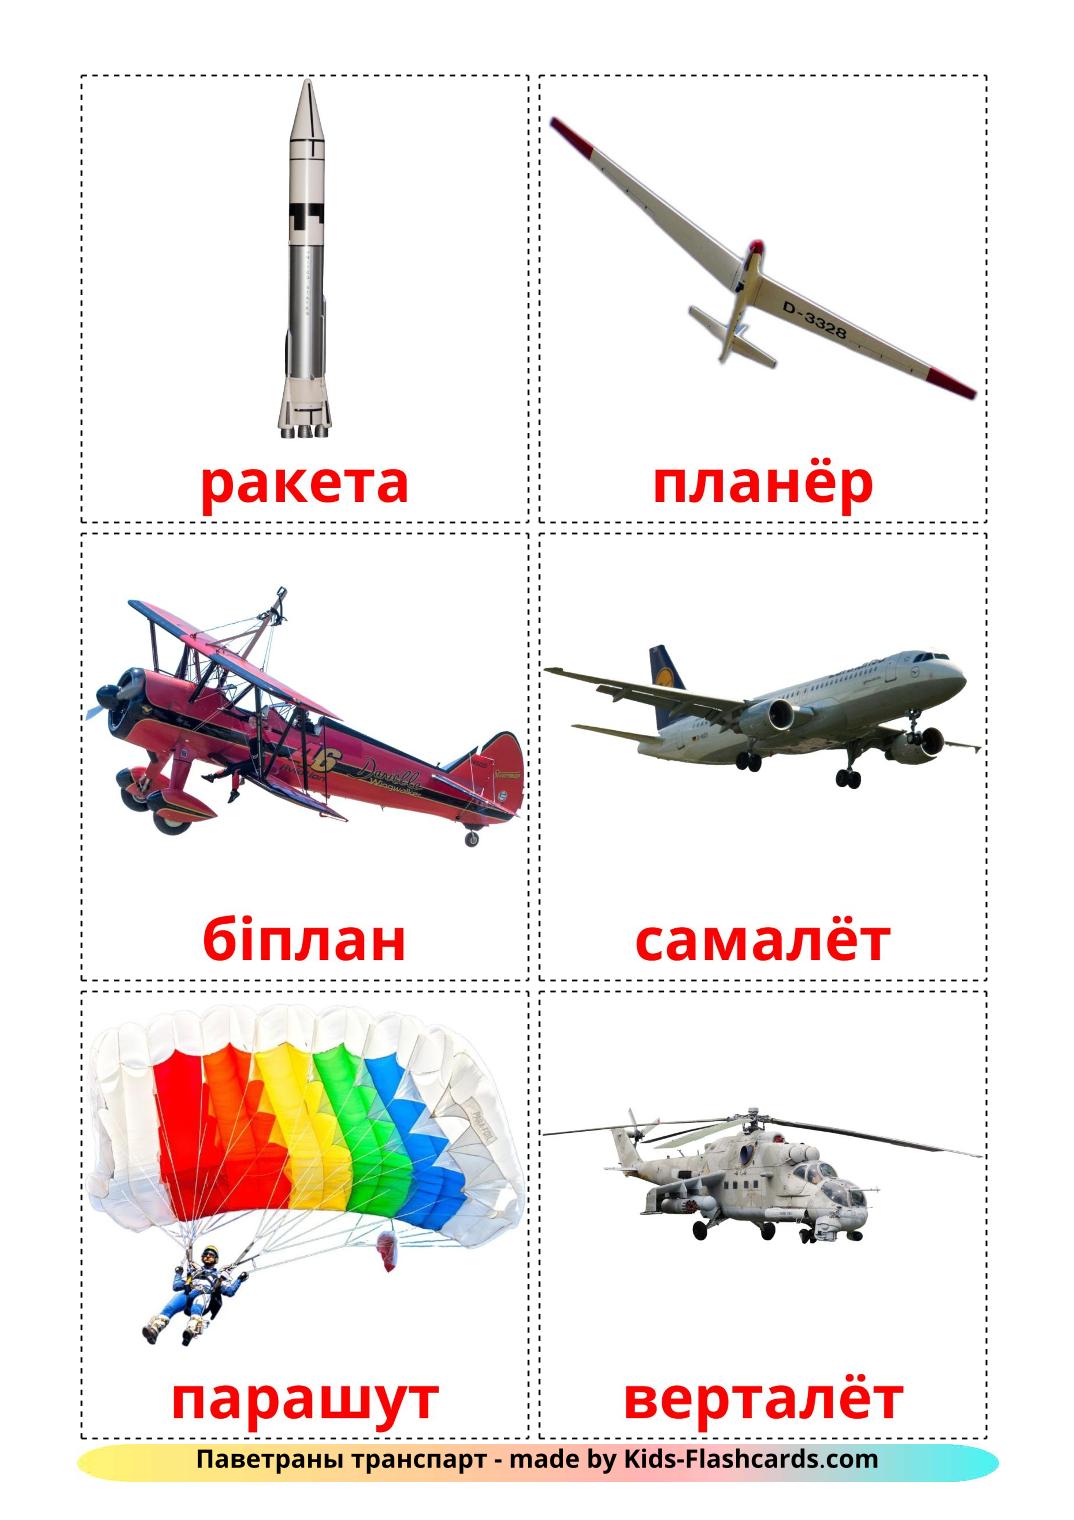 Lucht - 14 gratis printbare wit-russische kaarten